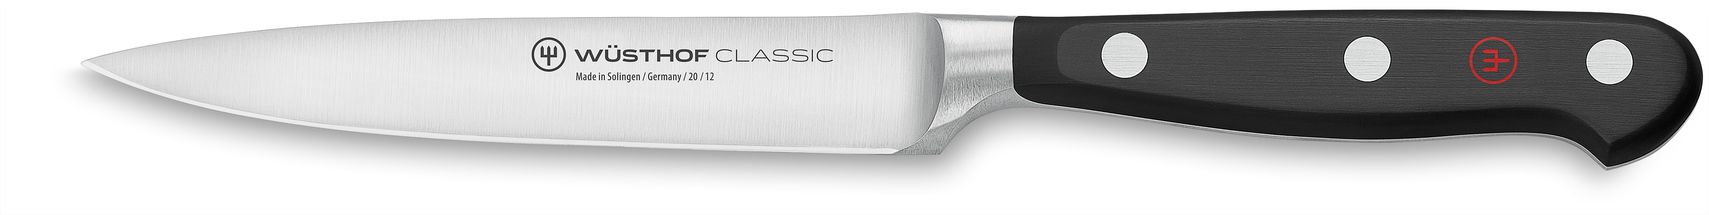 Couteau d'office Wusthof Classic 12 cm